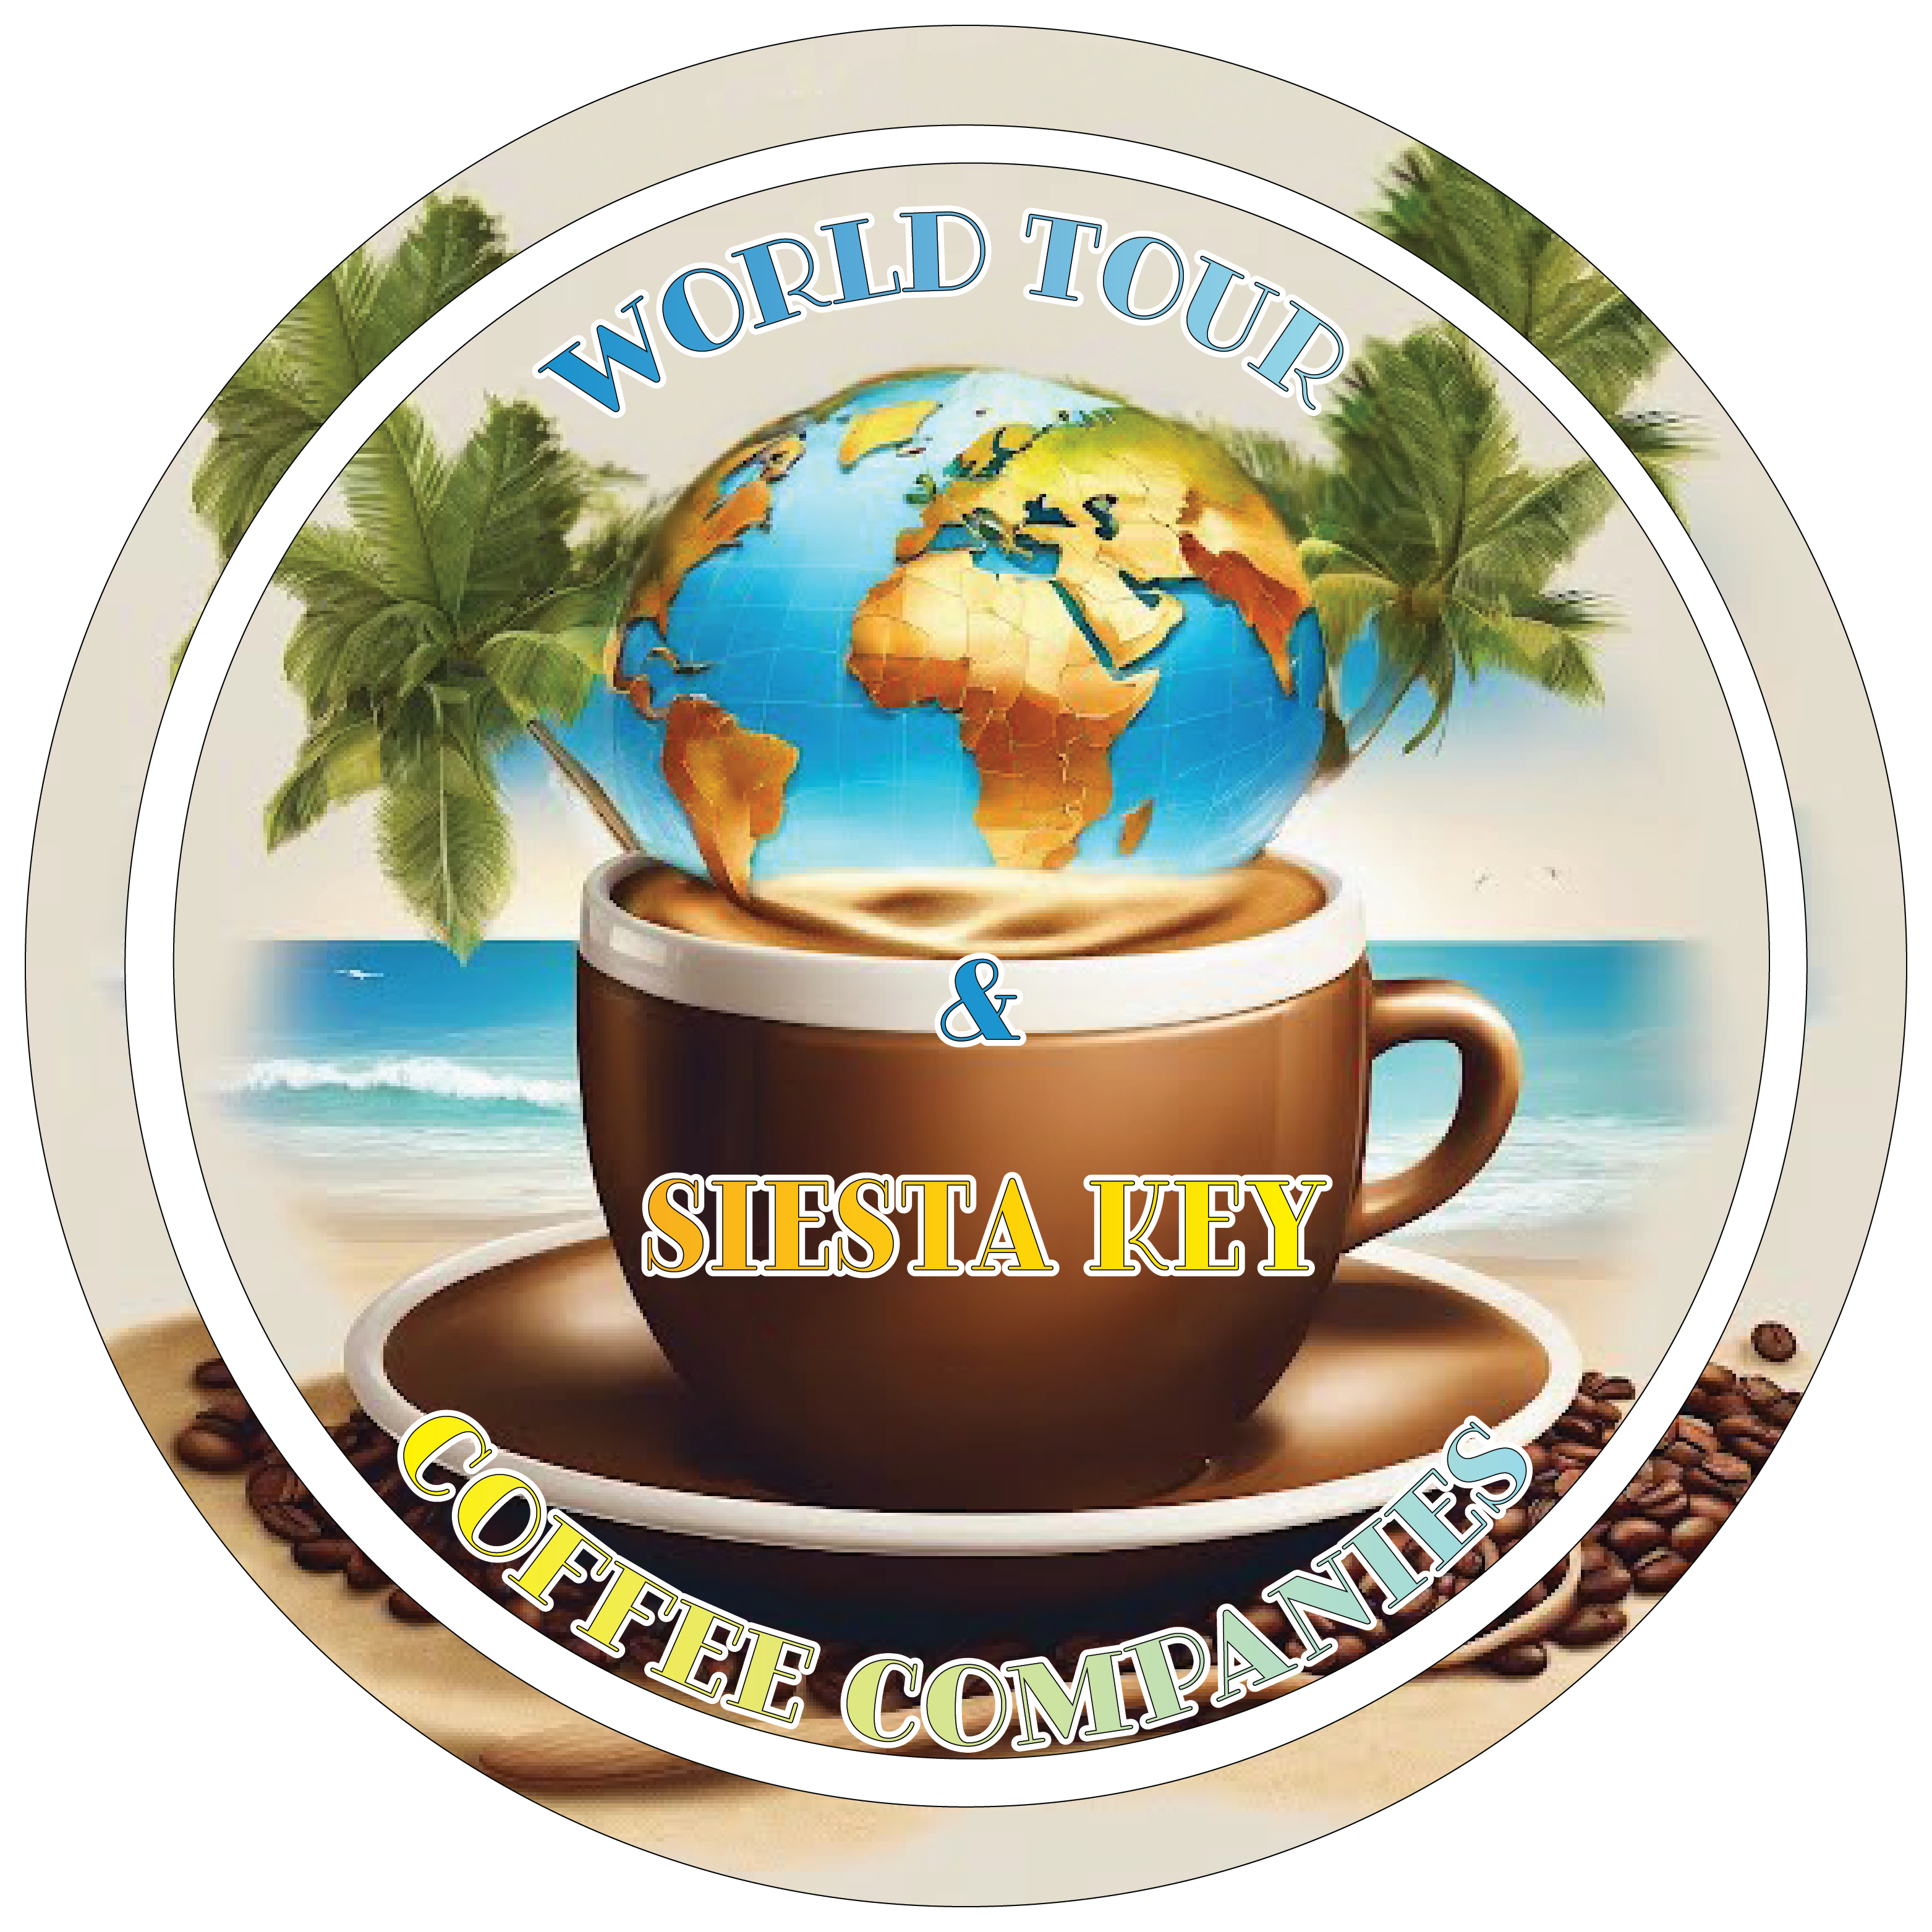 Siesta Key & World Tour Coffee Companies